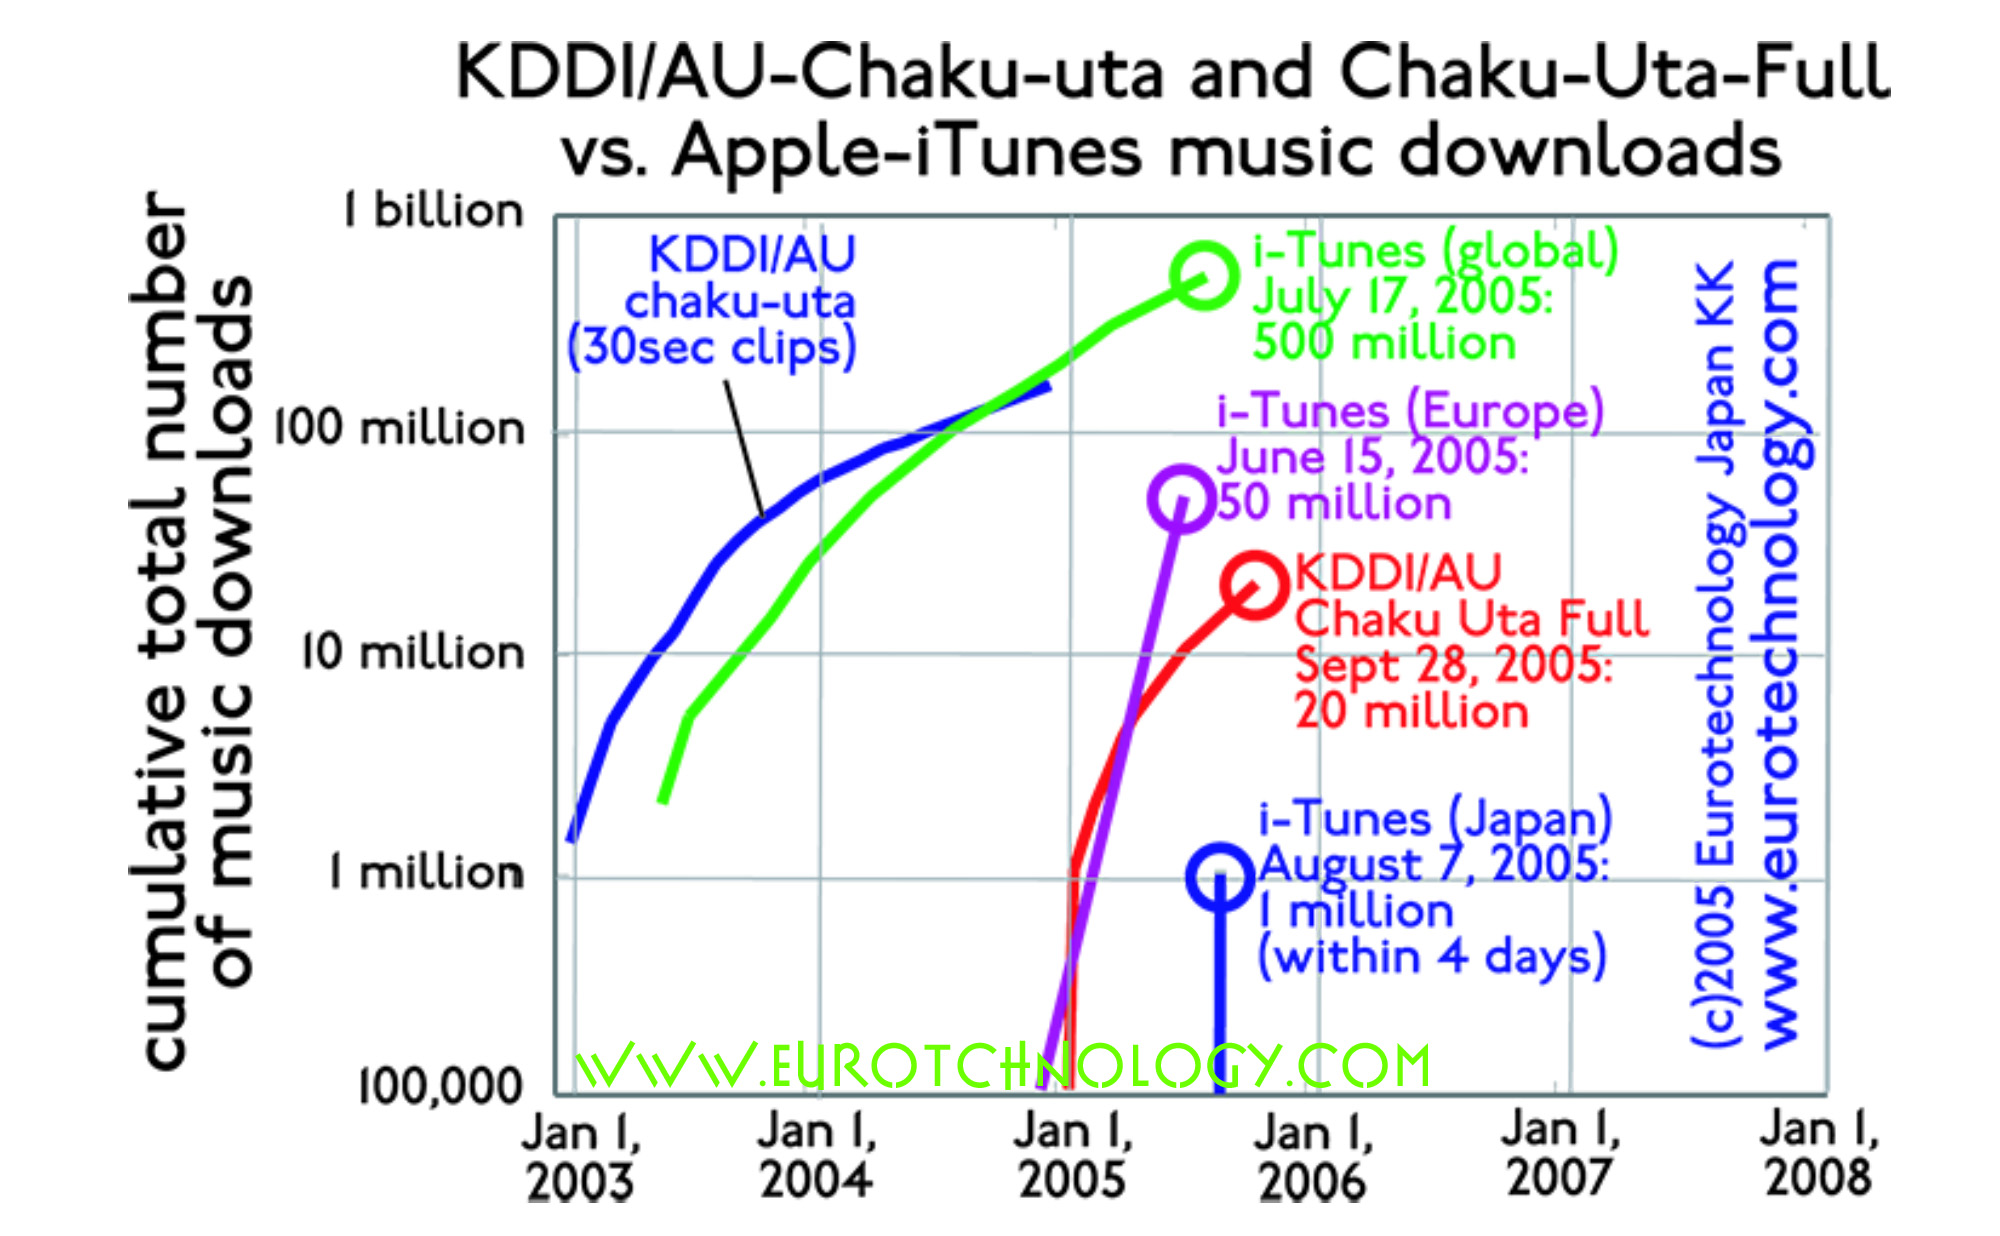 Chaku-Uta-Full: 5 million mobile music downloads in Japan KDDI pioneers full lengths mobile music song downloads via 3G